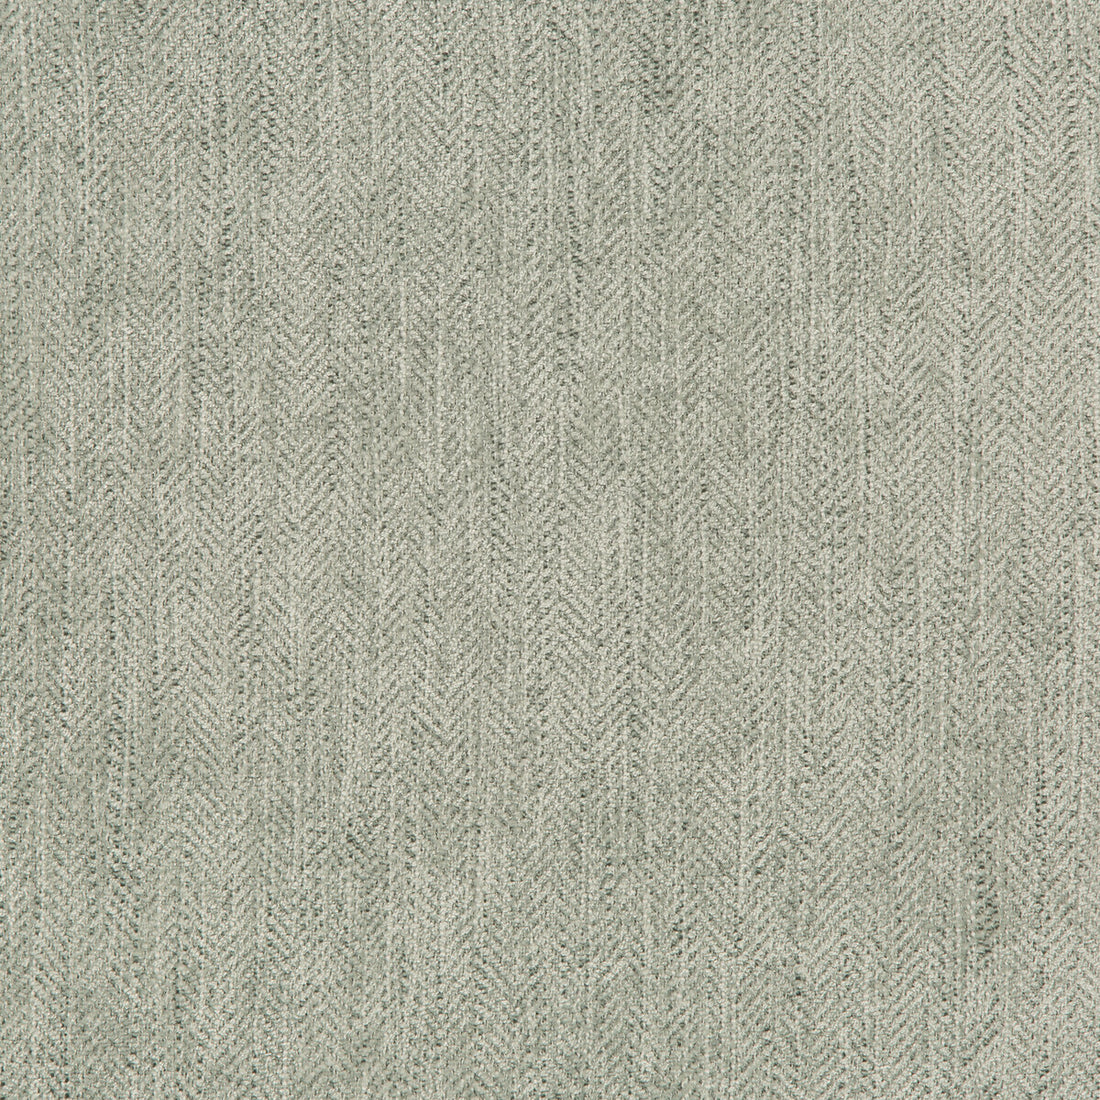 Kravet Smart fabric in 35933-23 color - pattern 35933.23.0 - by Kravet Smart in the Performance Kravetarmor collection